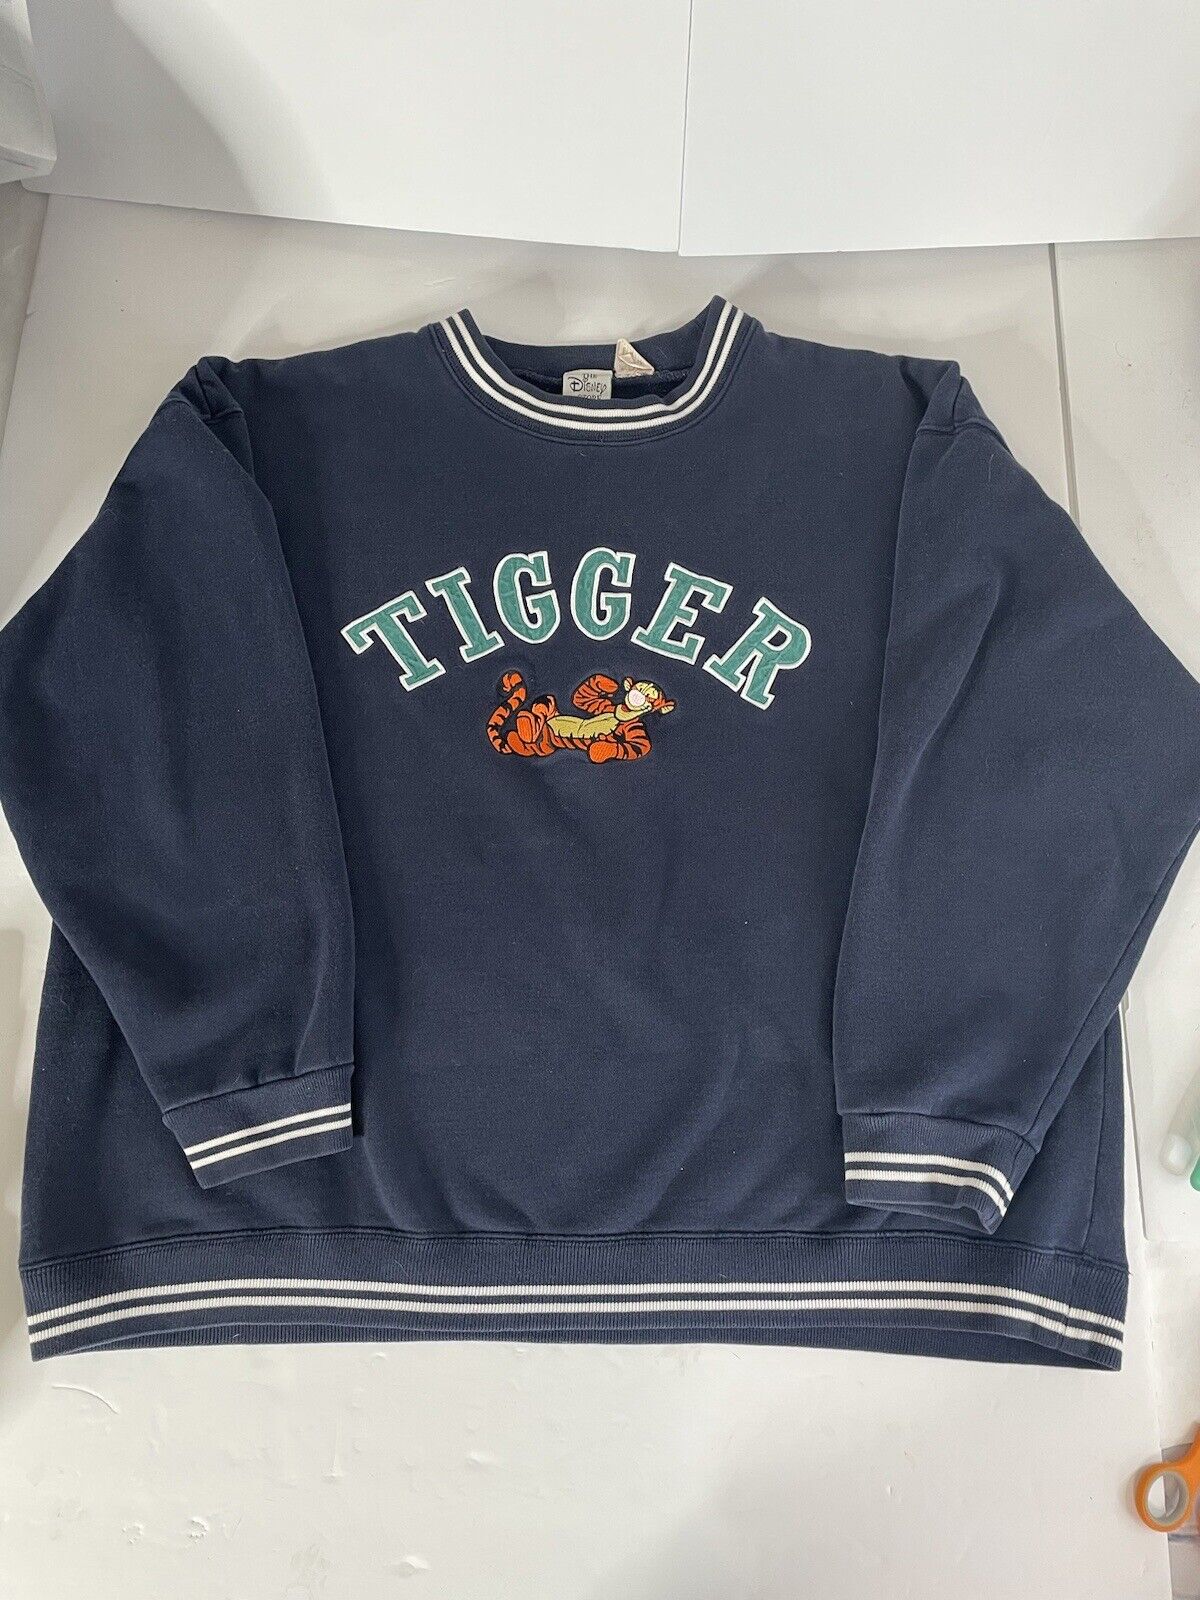 Tigger Disney Embroidered Sweatshirt Women XL Vintage Navy Blue Crew Neck Baggy